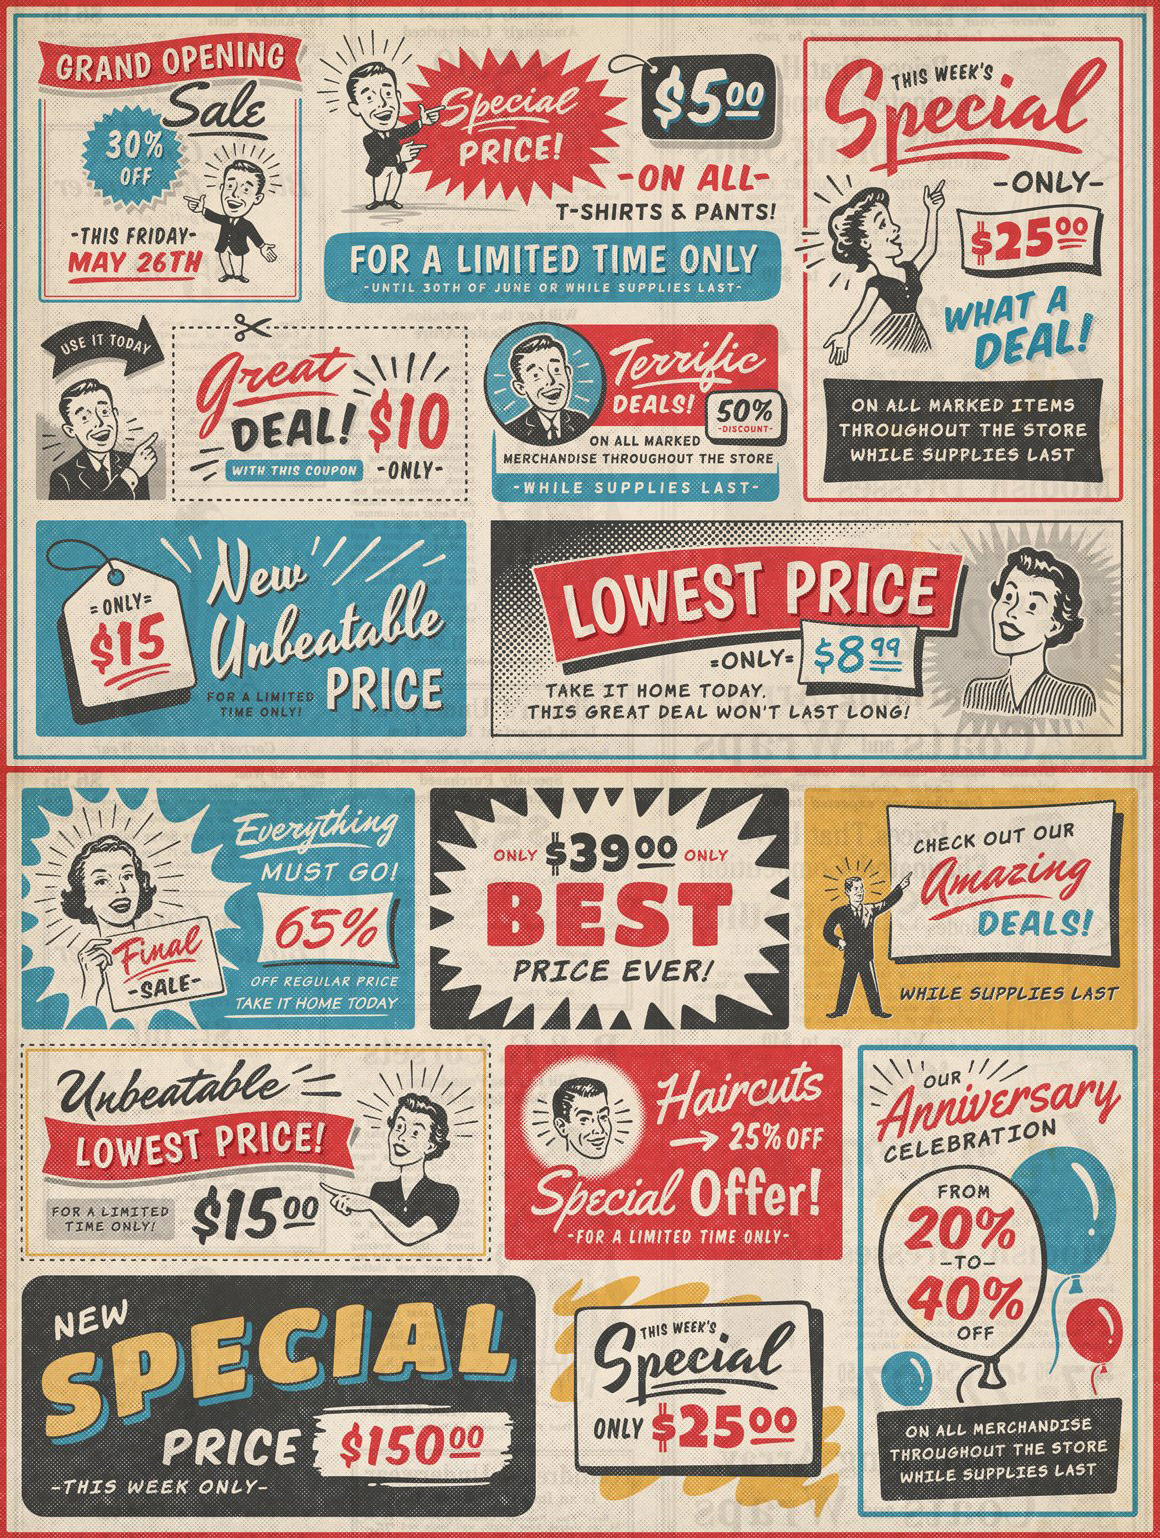 1950s-retro-style-vintage-ad-templates